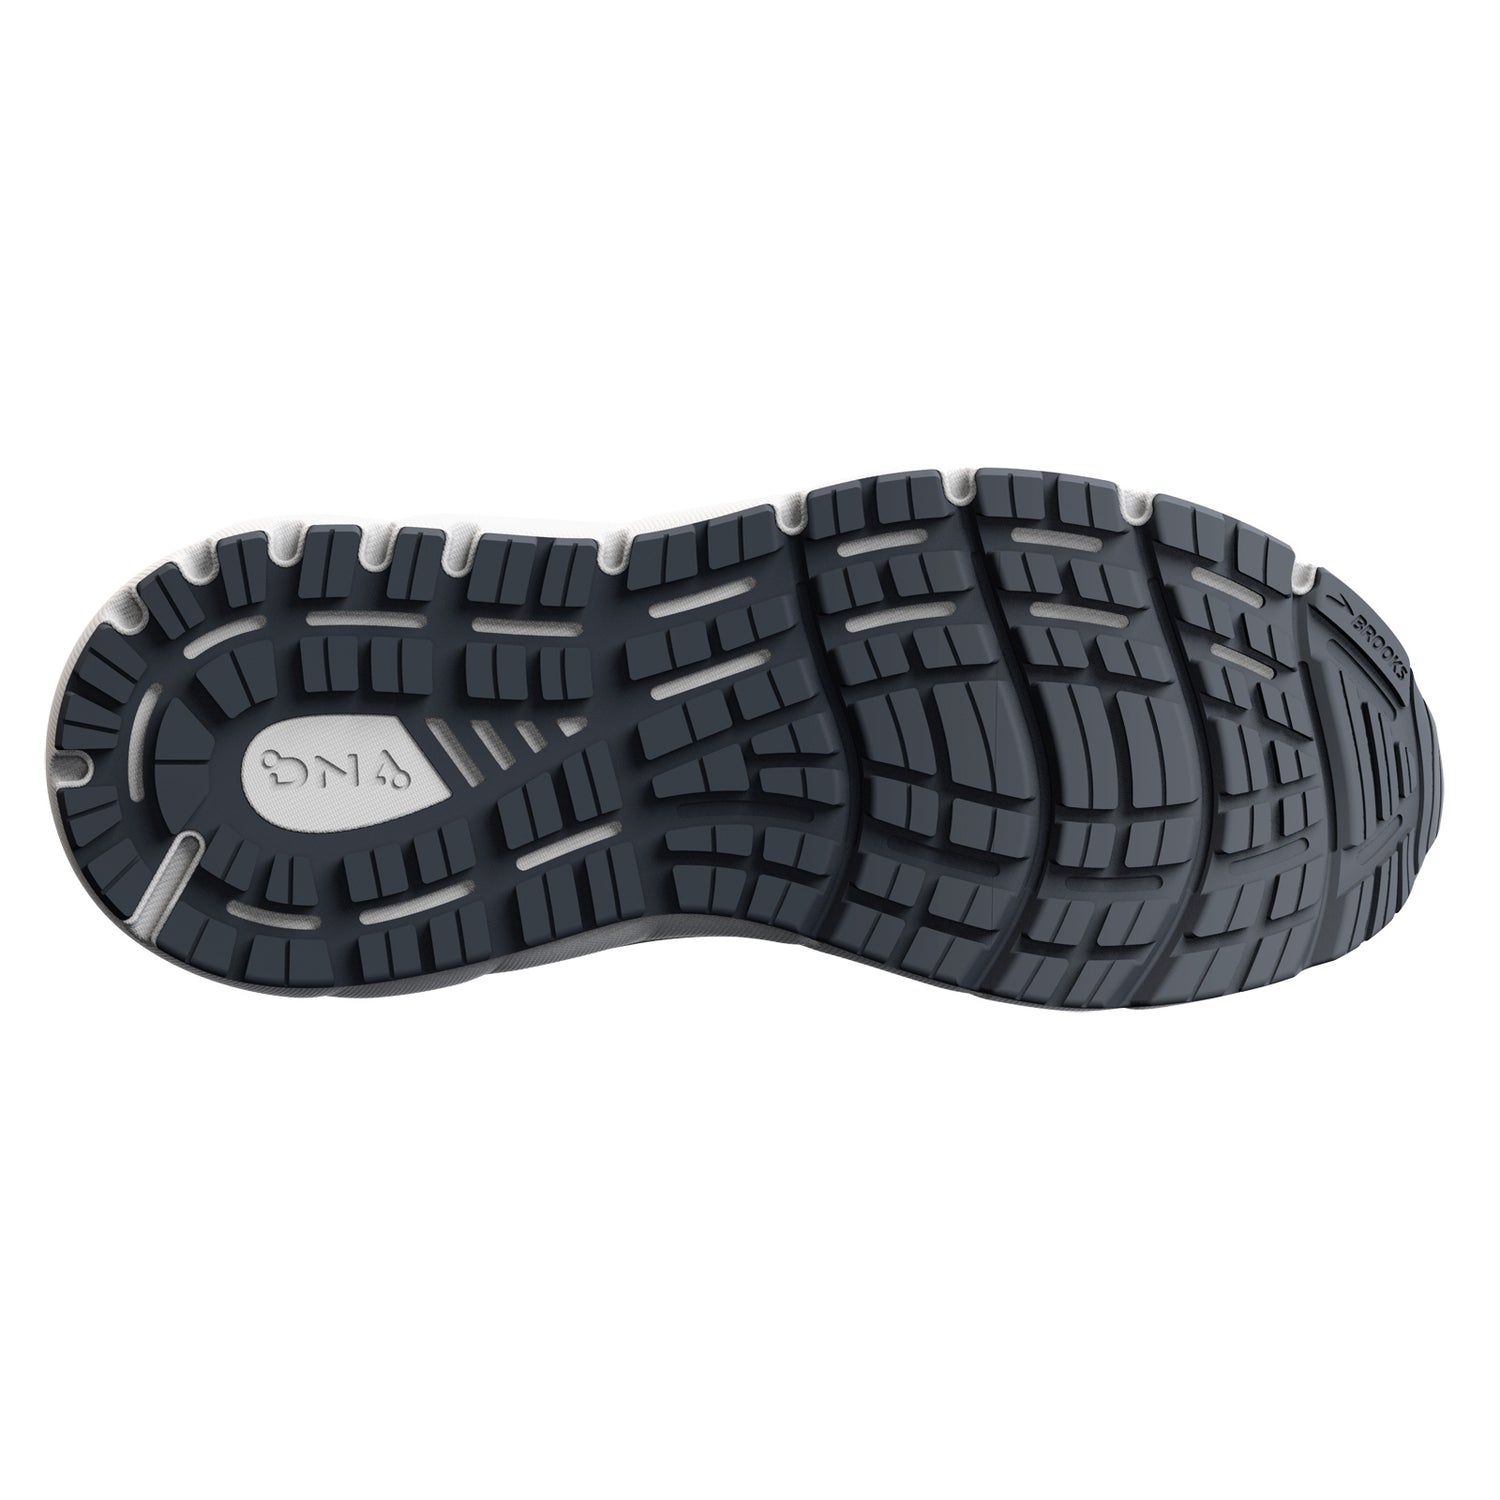 Peltz Shoes  Men's Brooks Addiction GTS 15 Running Shoe - Wide Width Grey/Ebony/Chili Oil 110365 2E 043